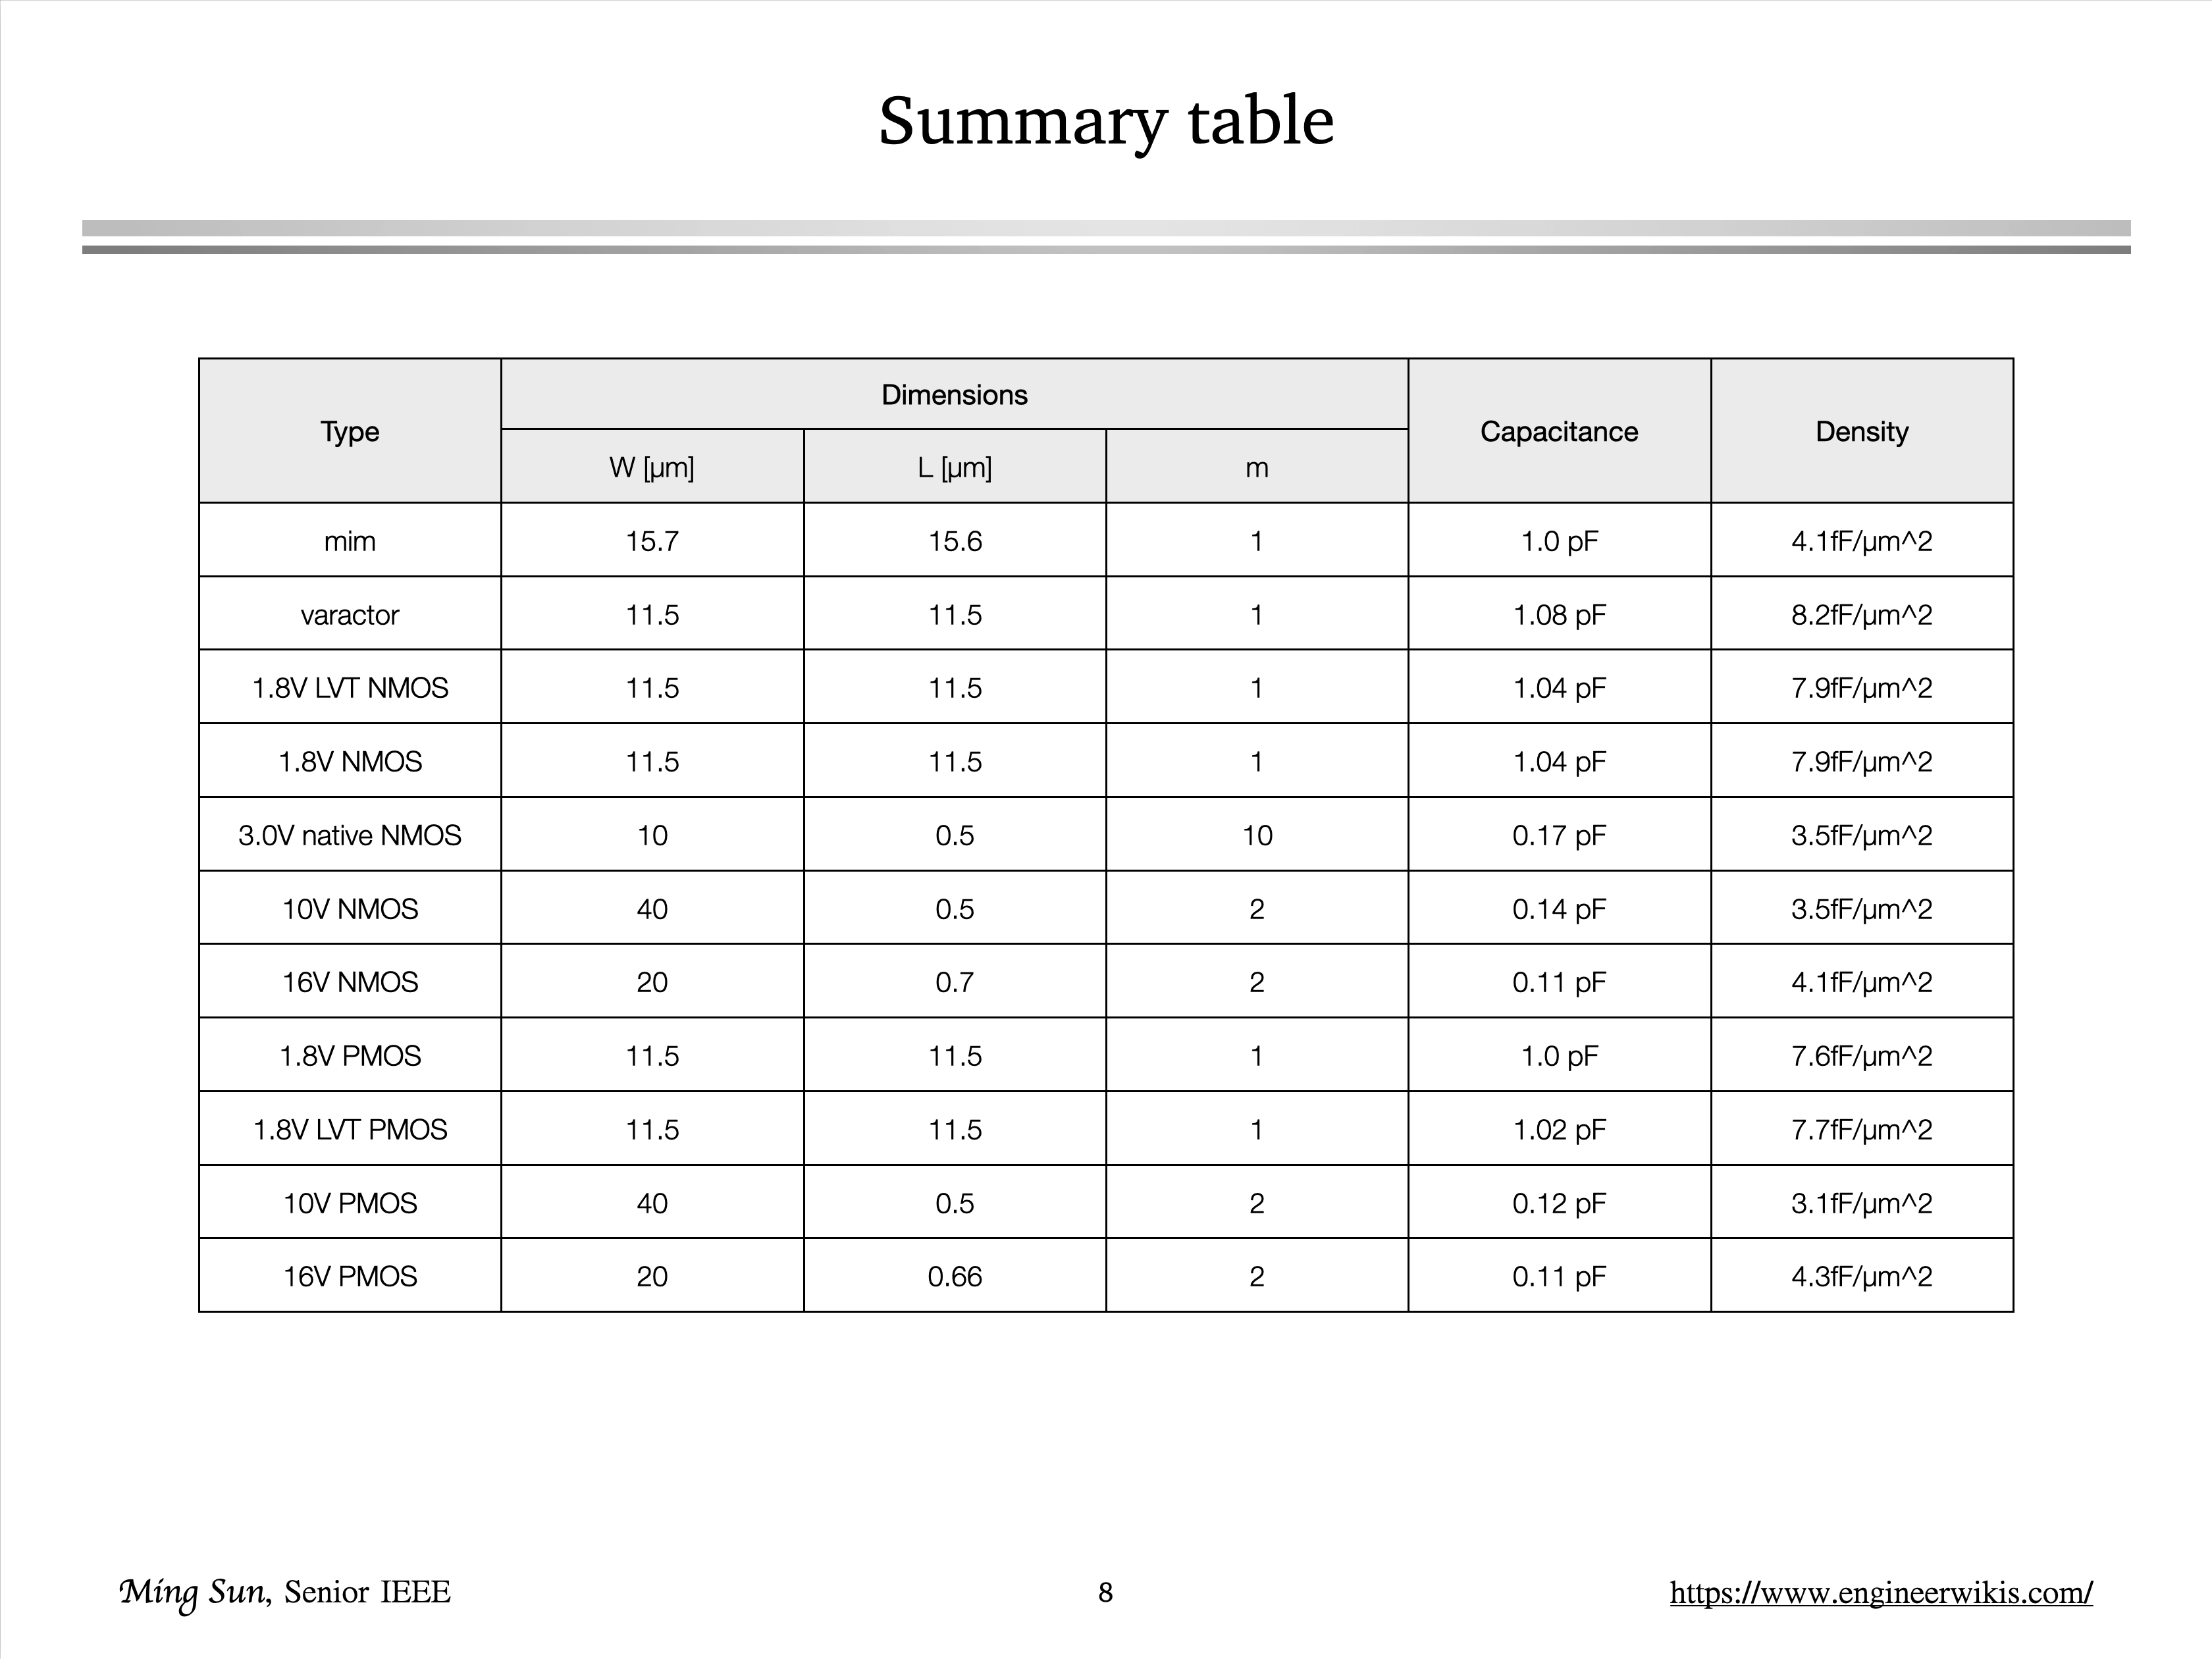 Capacitance density summary table